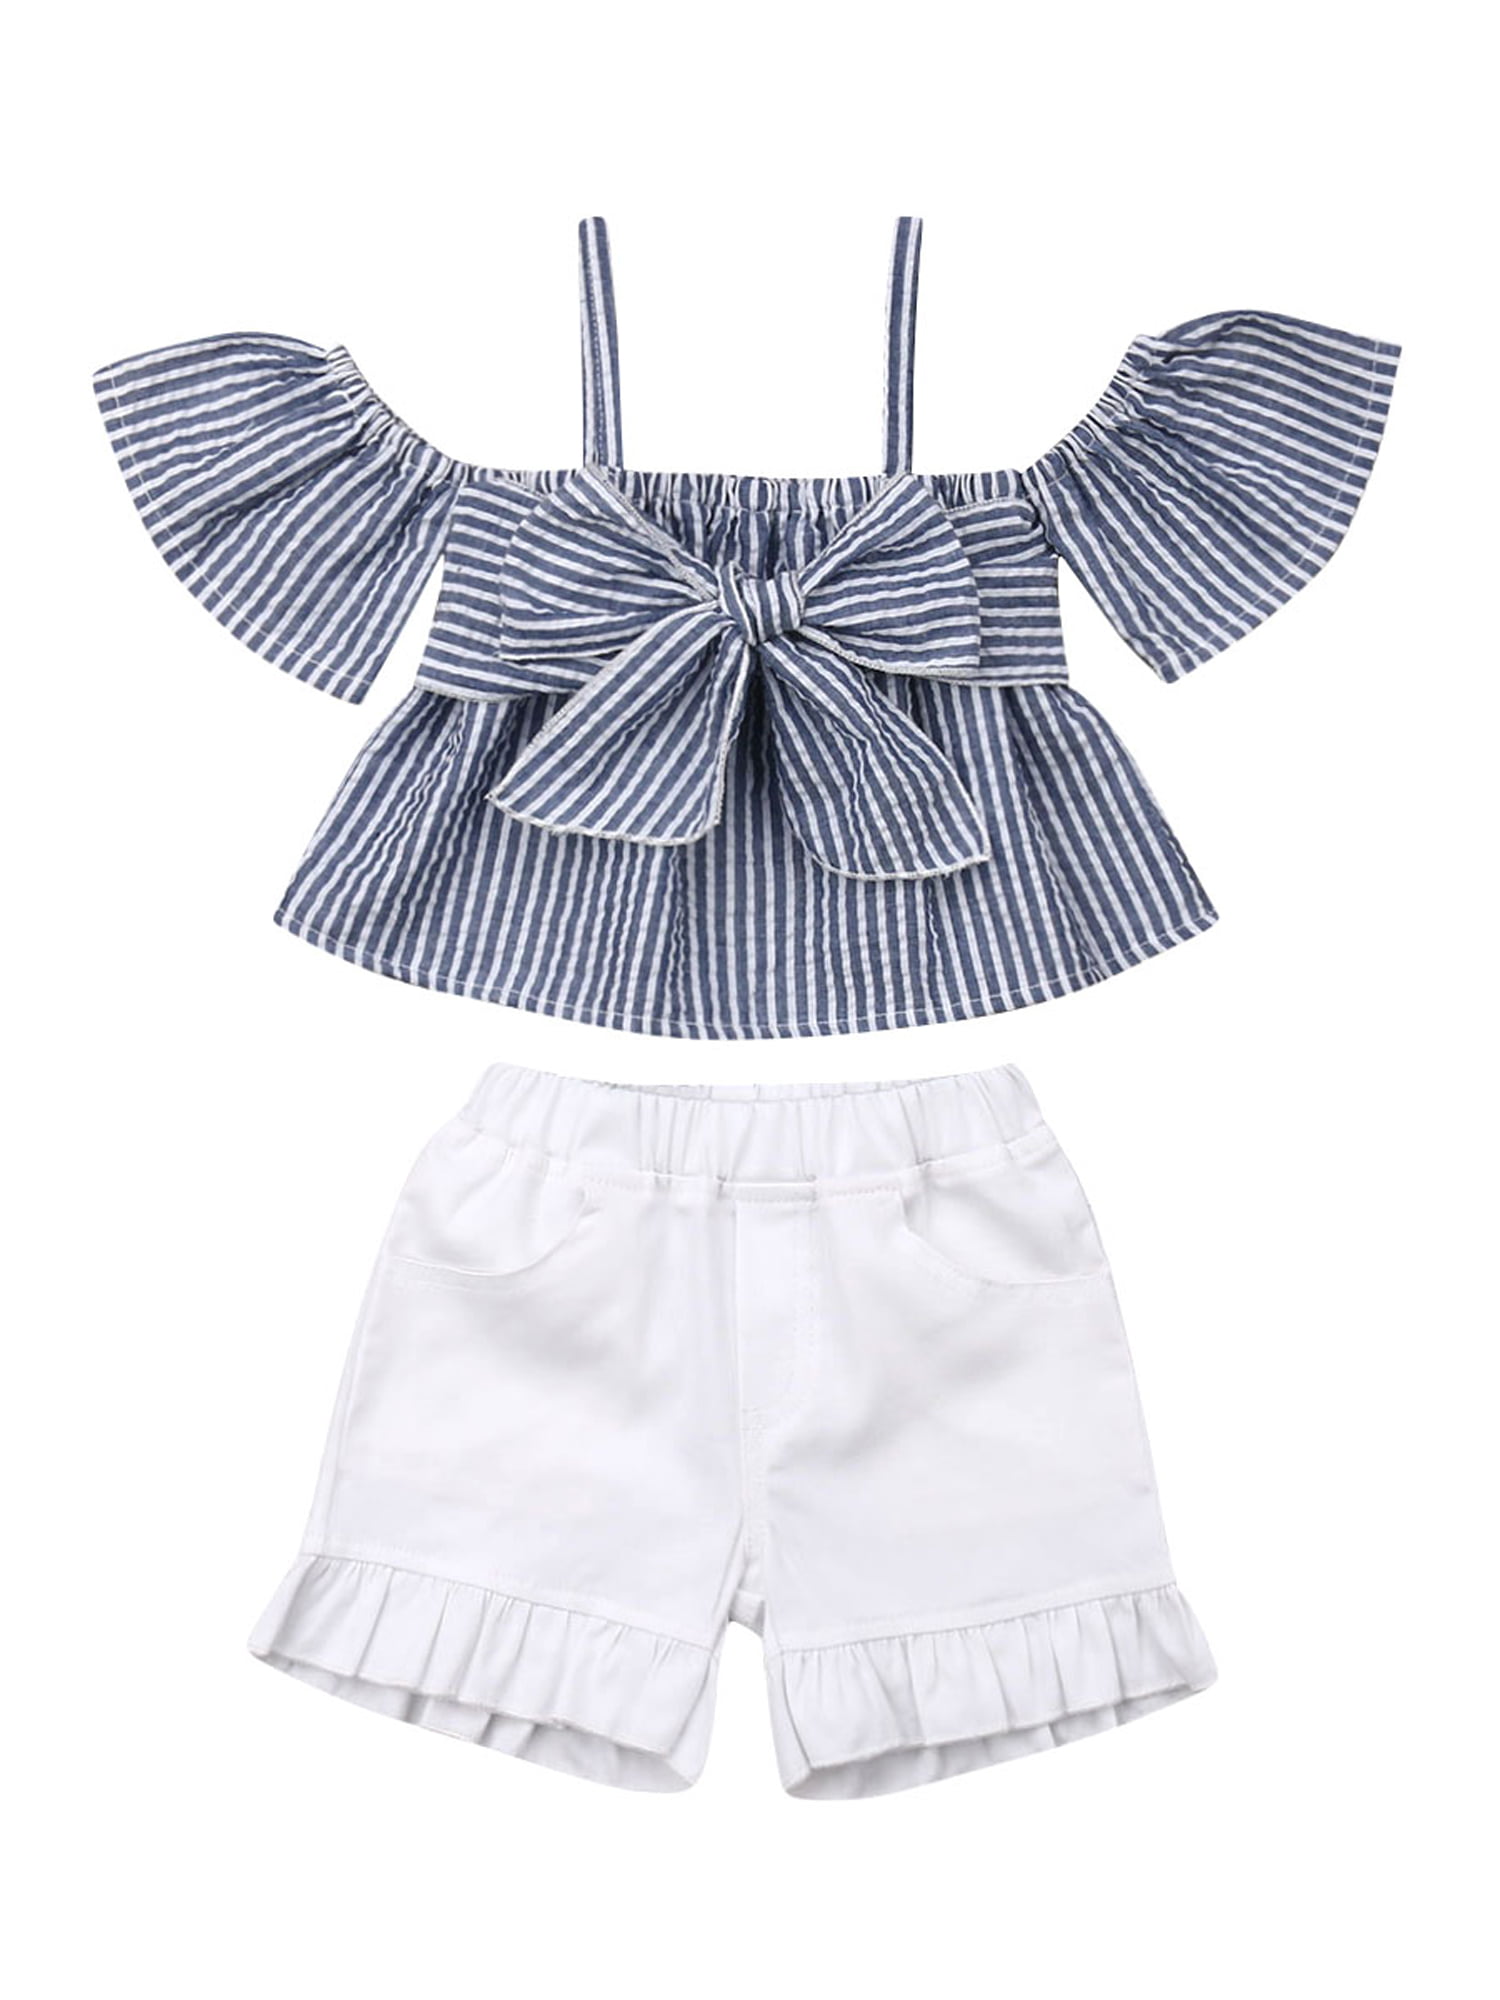 Toddler Baby Girl Summer Hawaiian Outfits Off Shoulder Crop Tops Ruffles  Tutu Skirts Beach Clothes Set 